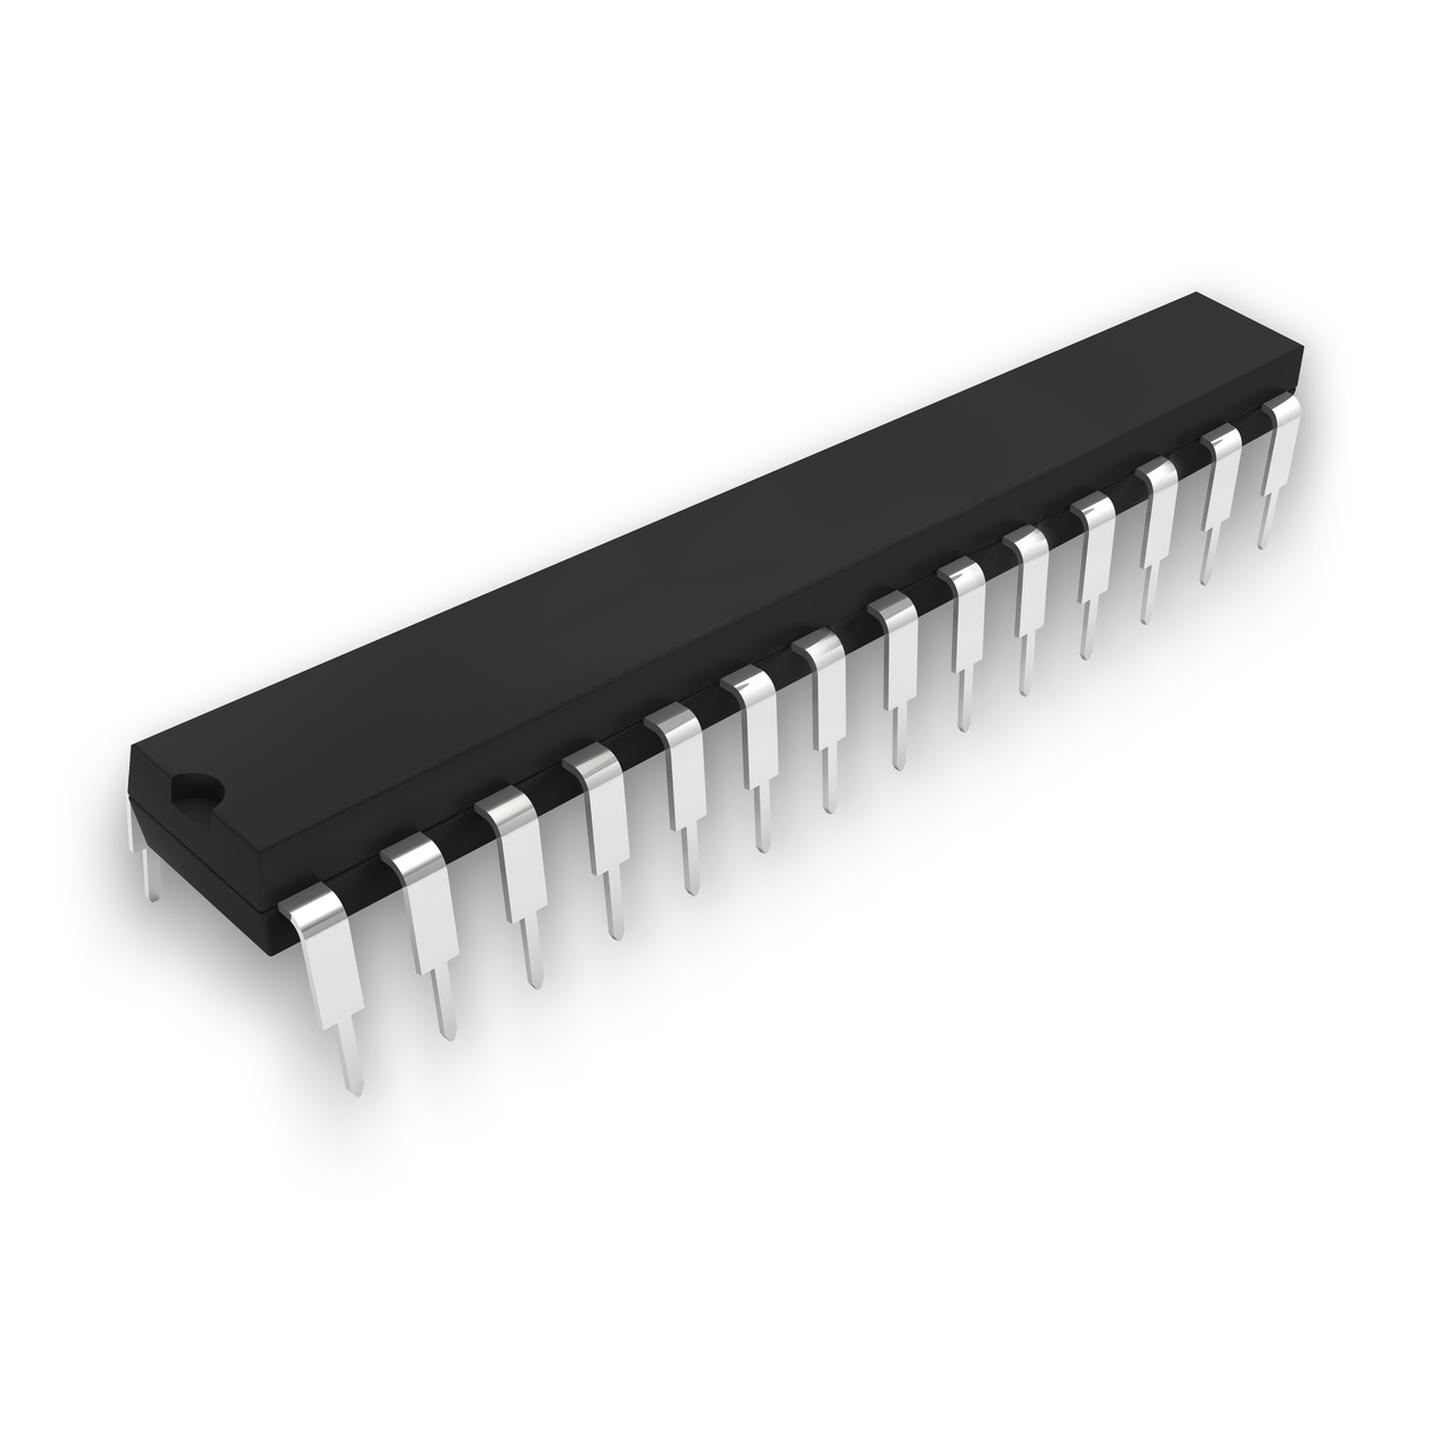 ATmega8 AVR 8 Bit RISC Microcontroller